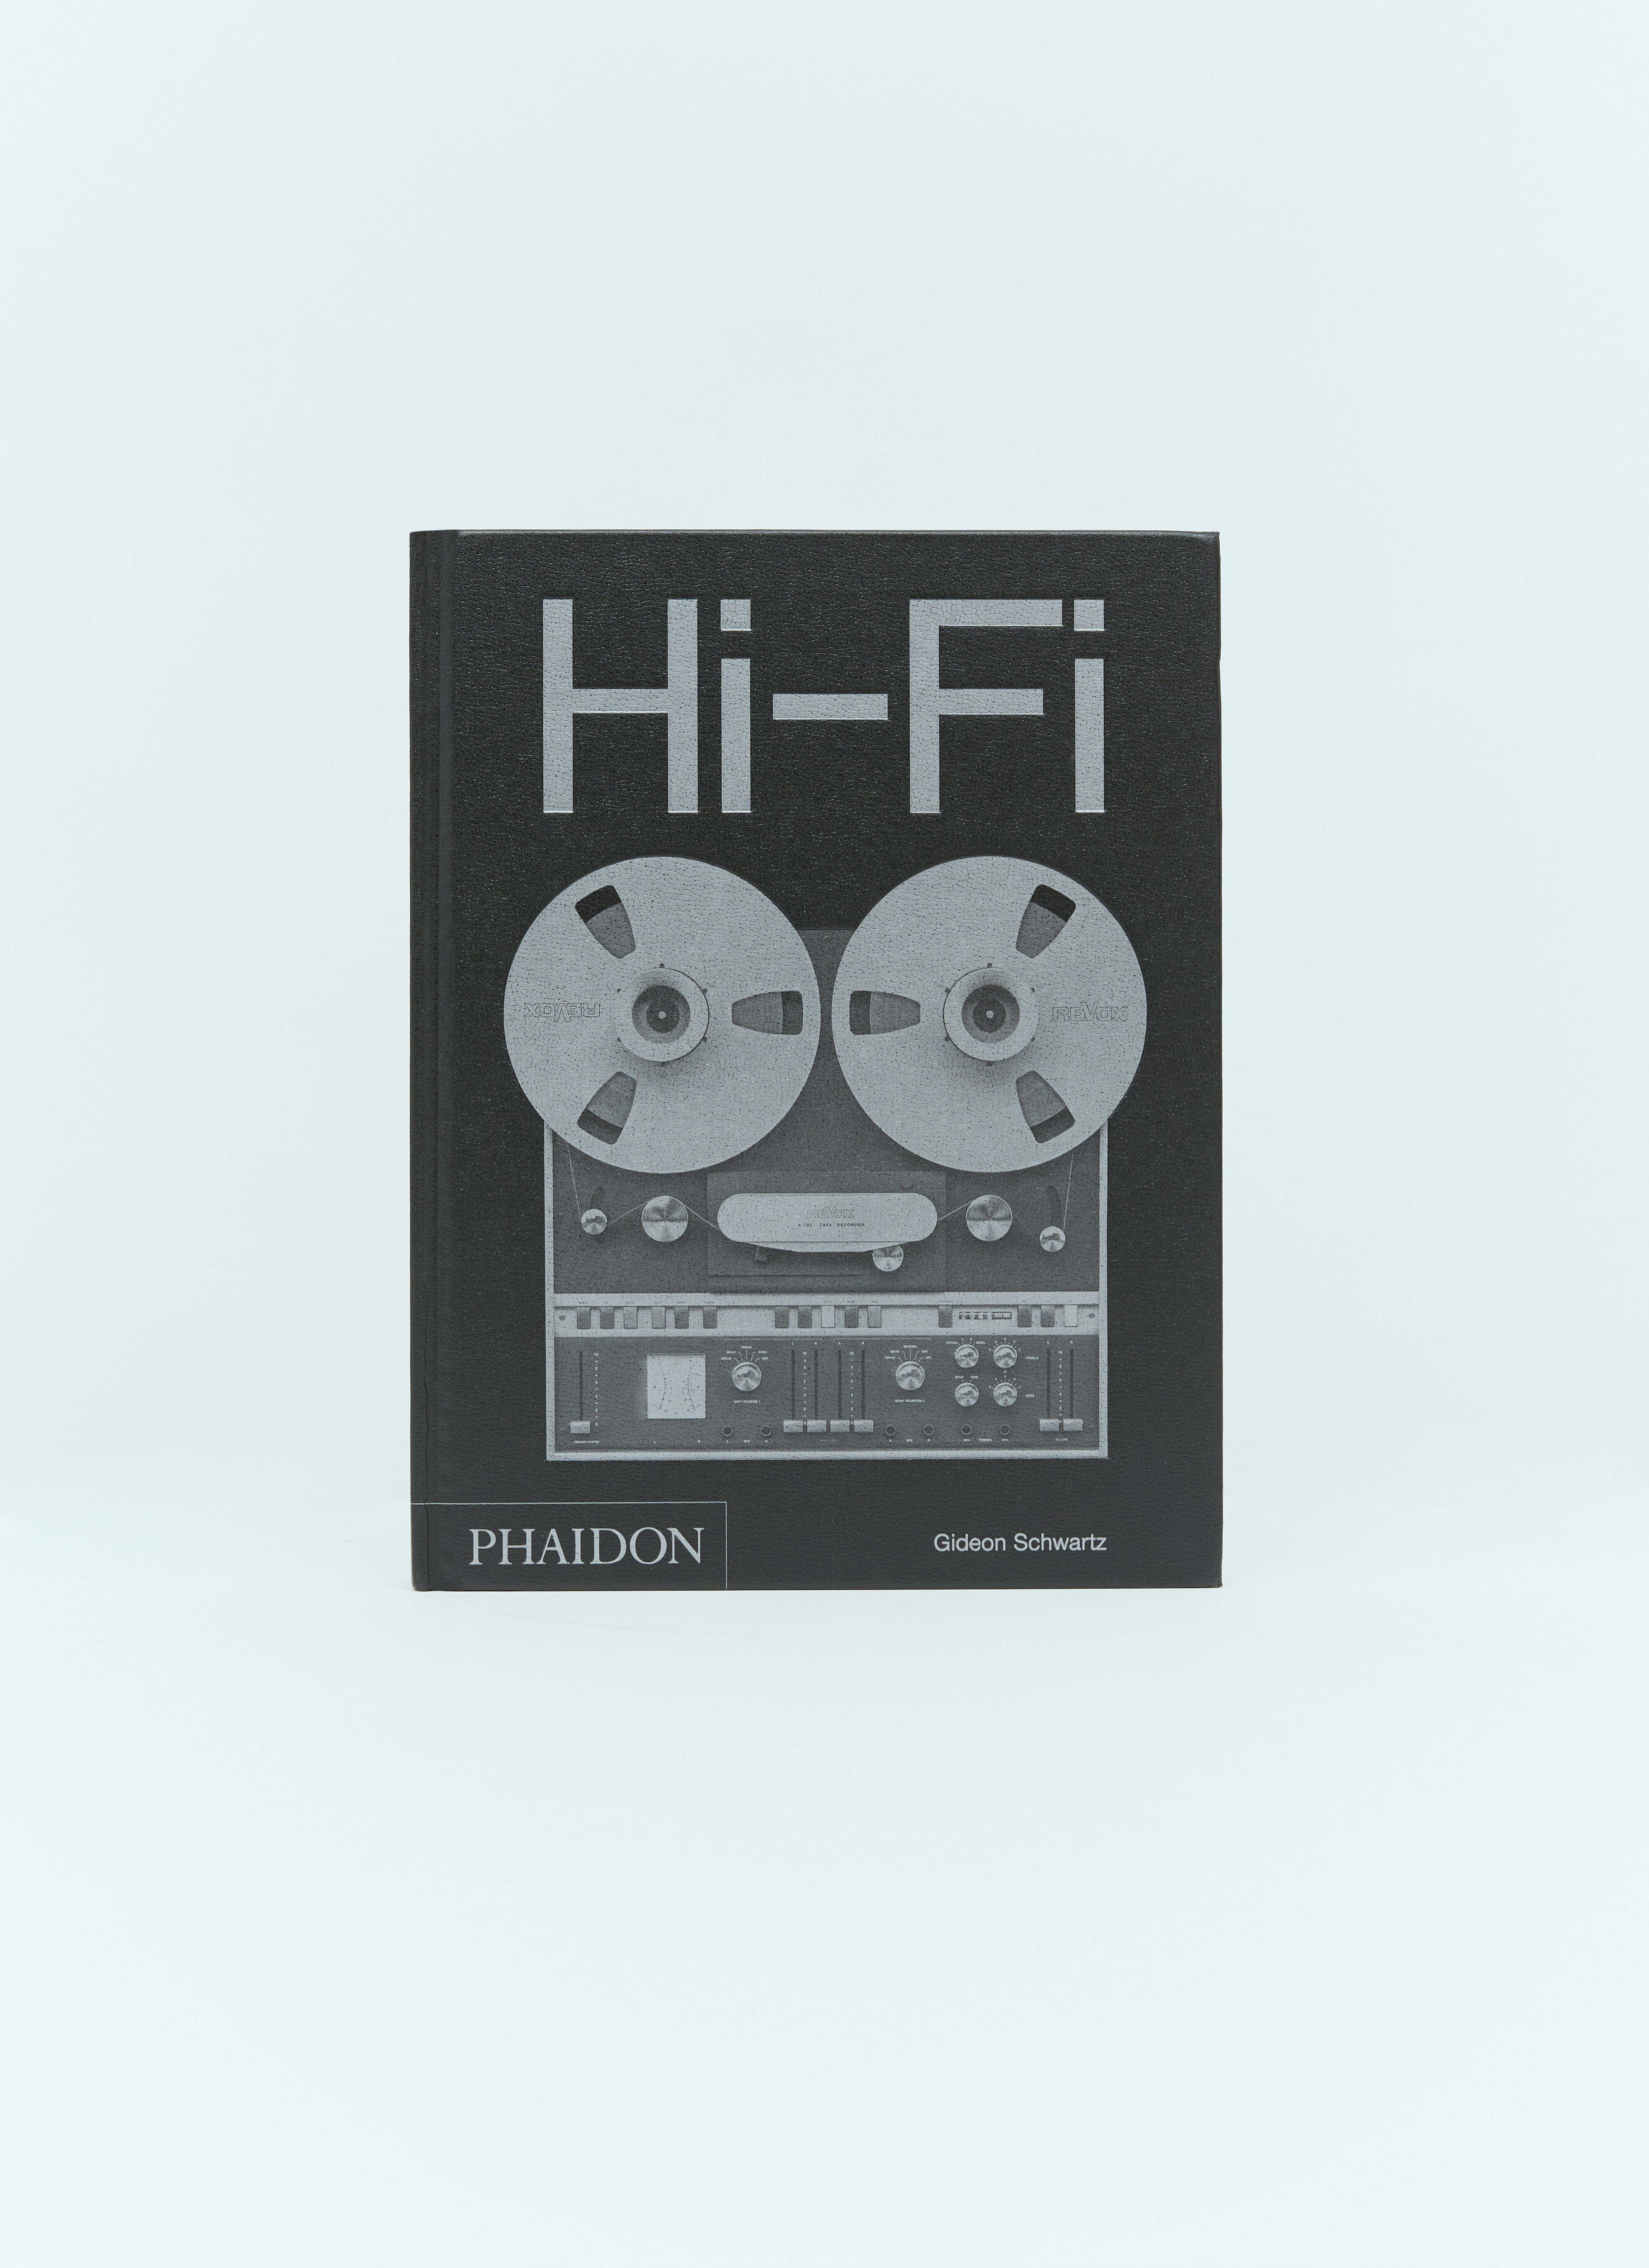 Humanrace Hi-Fi: The History of High-End Audio Design White hmr0355005